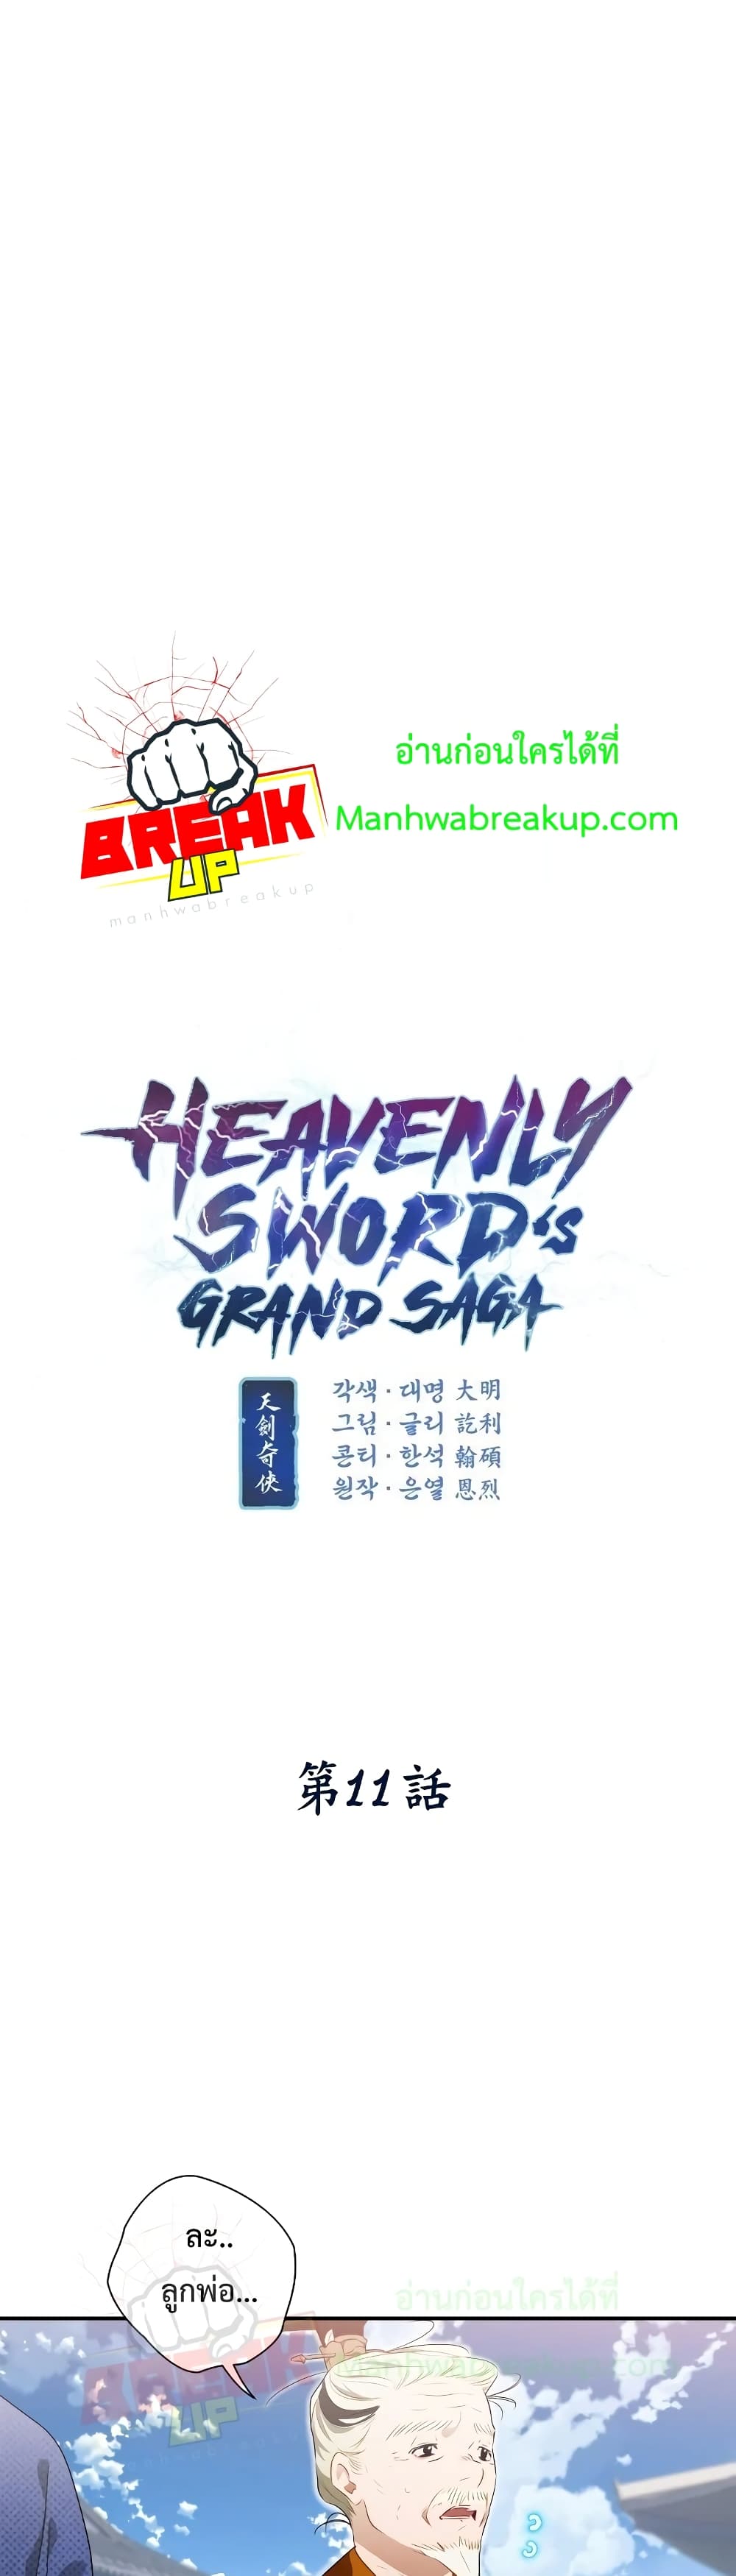 Heavenly Sword’s Grand Saga ตอนที่ 11 (3)